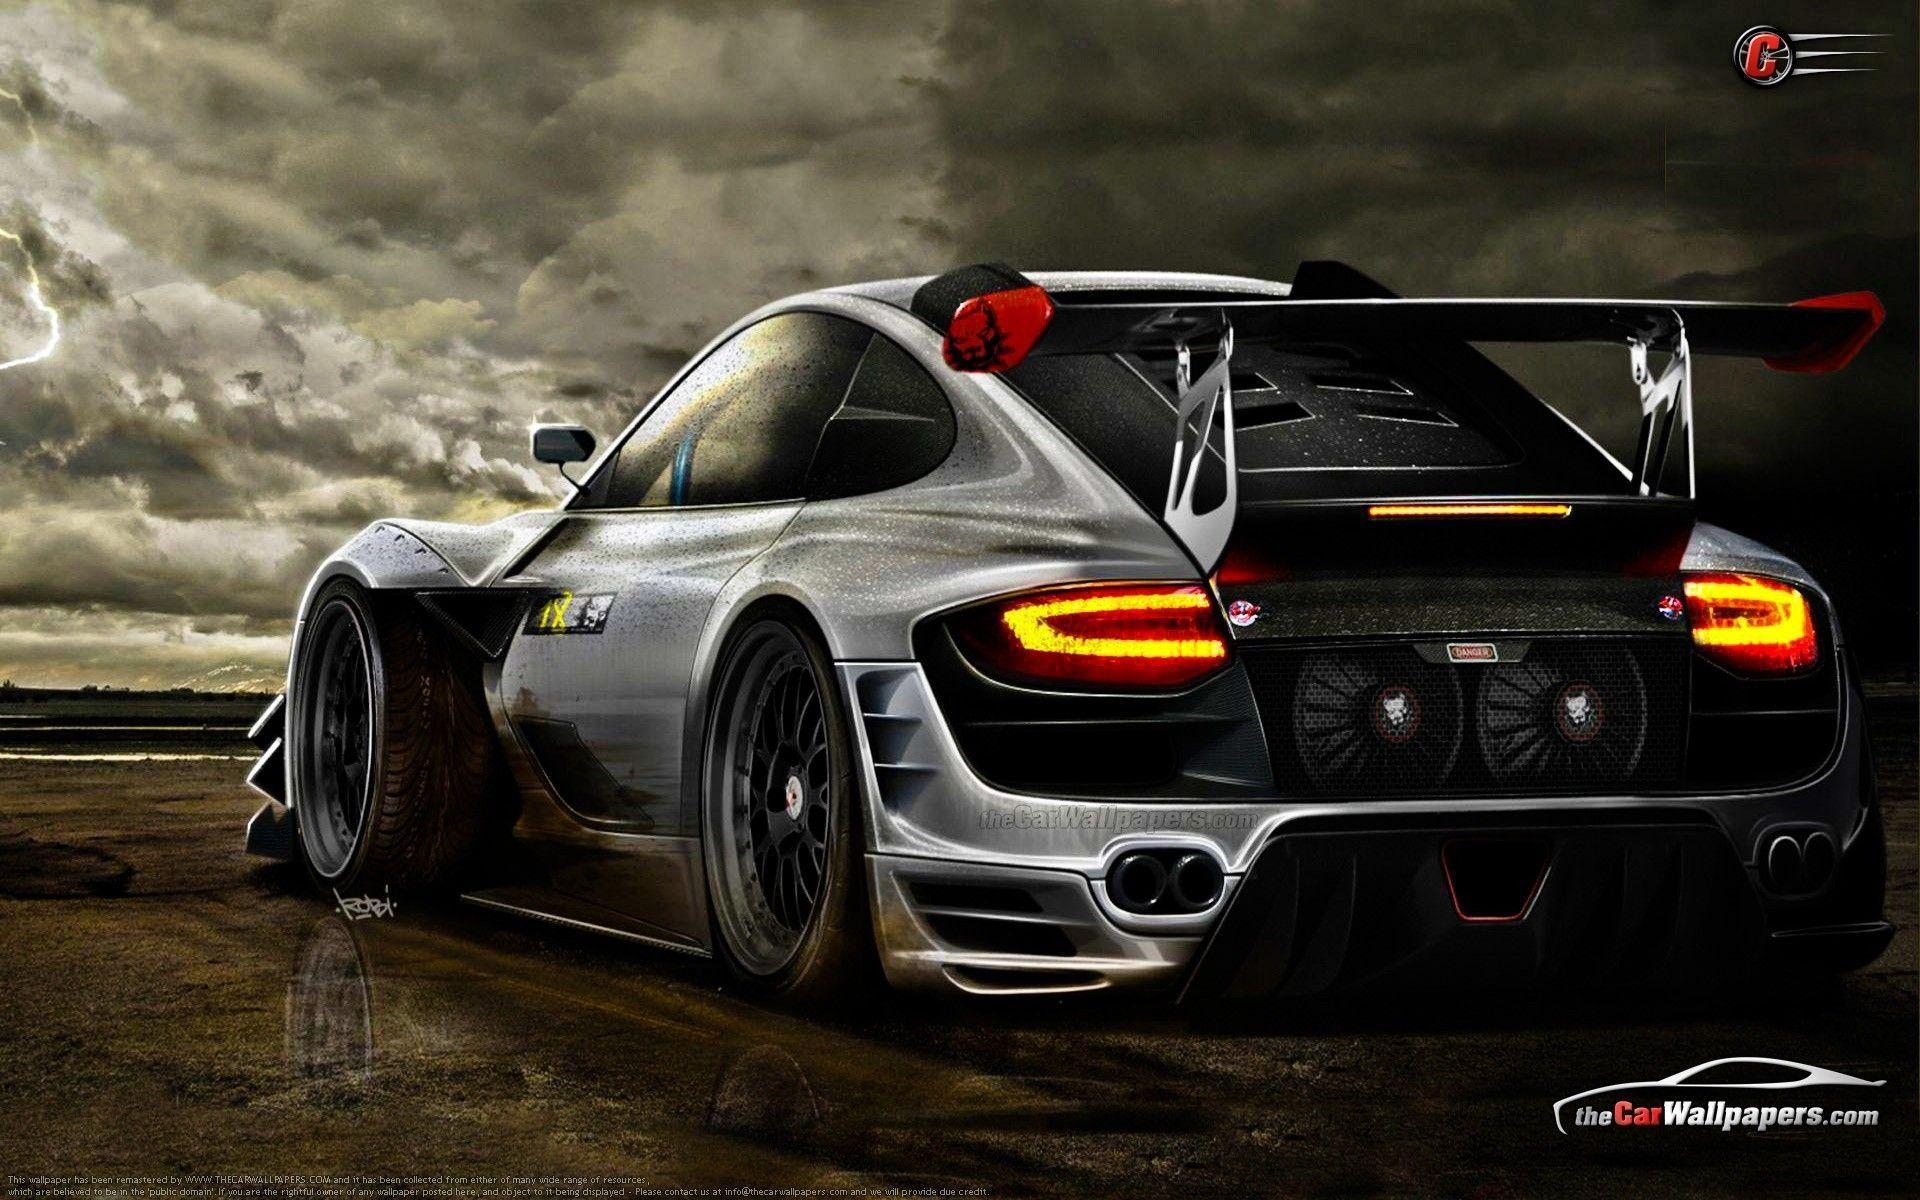 Awesome Porsche 911 Carrera wallpaper HD